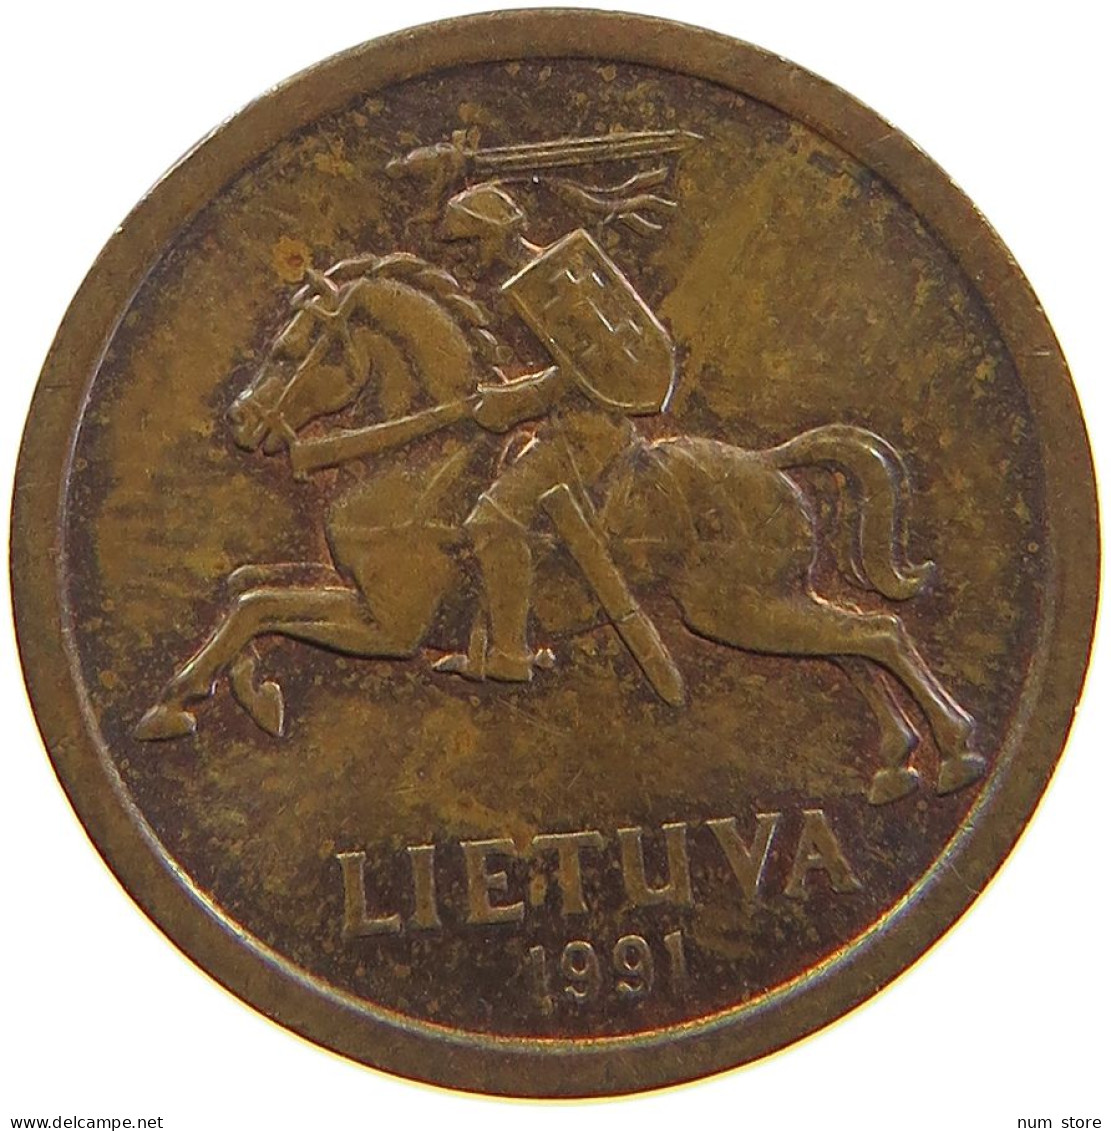 LITHUANIA 10 CENTU 1991 #s105 0615 - Litauen